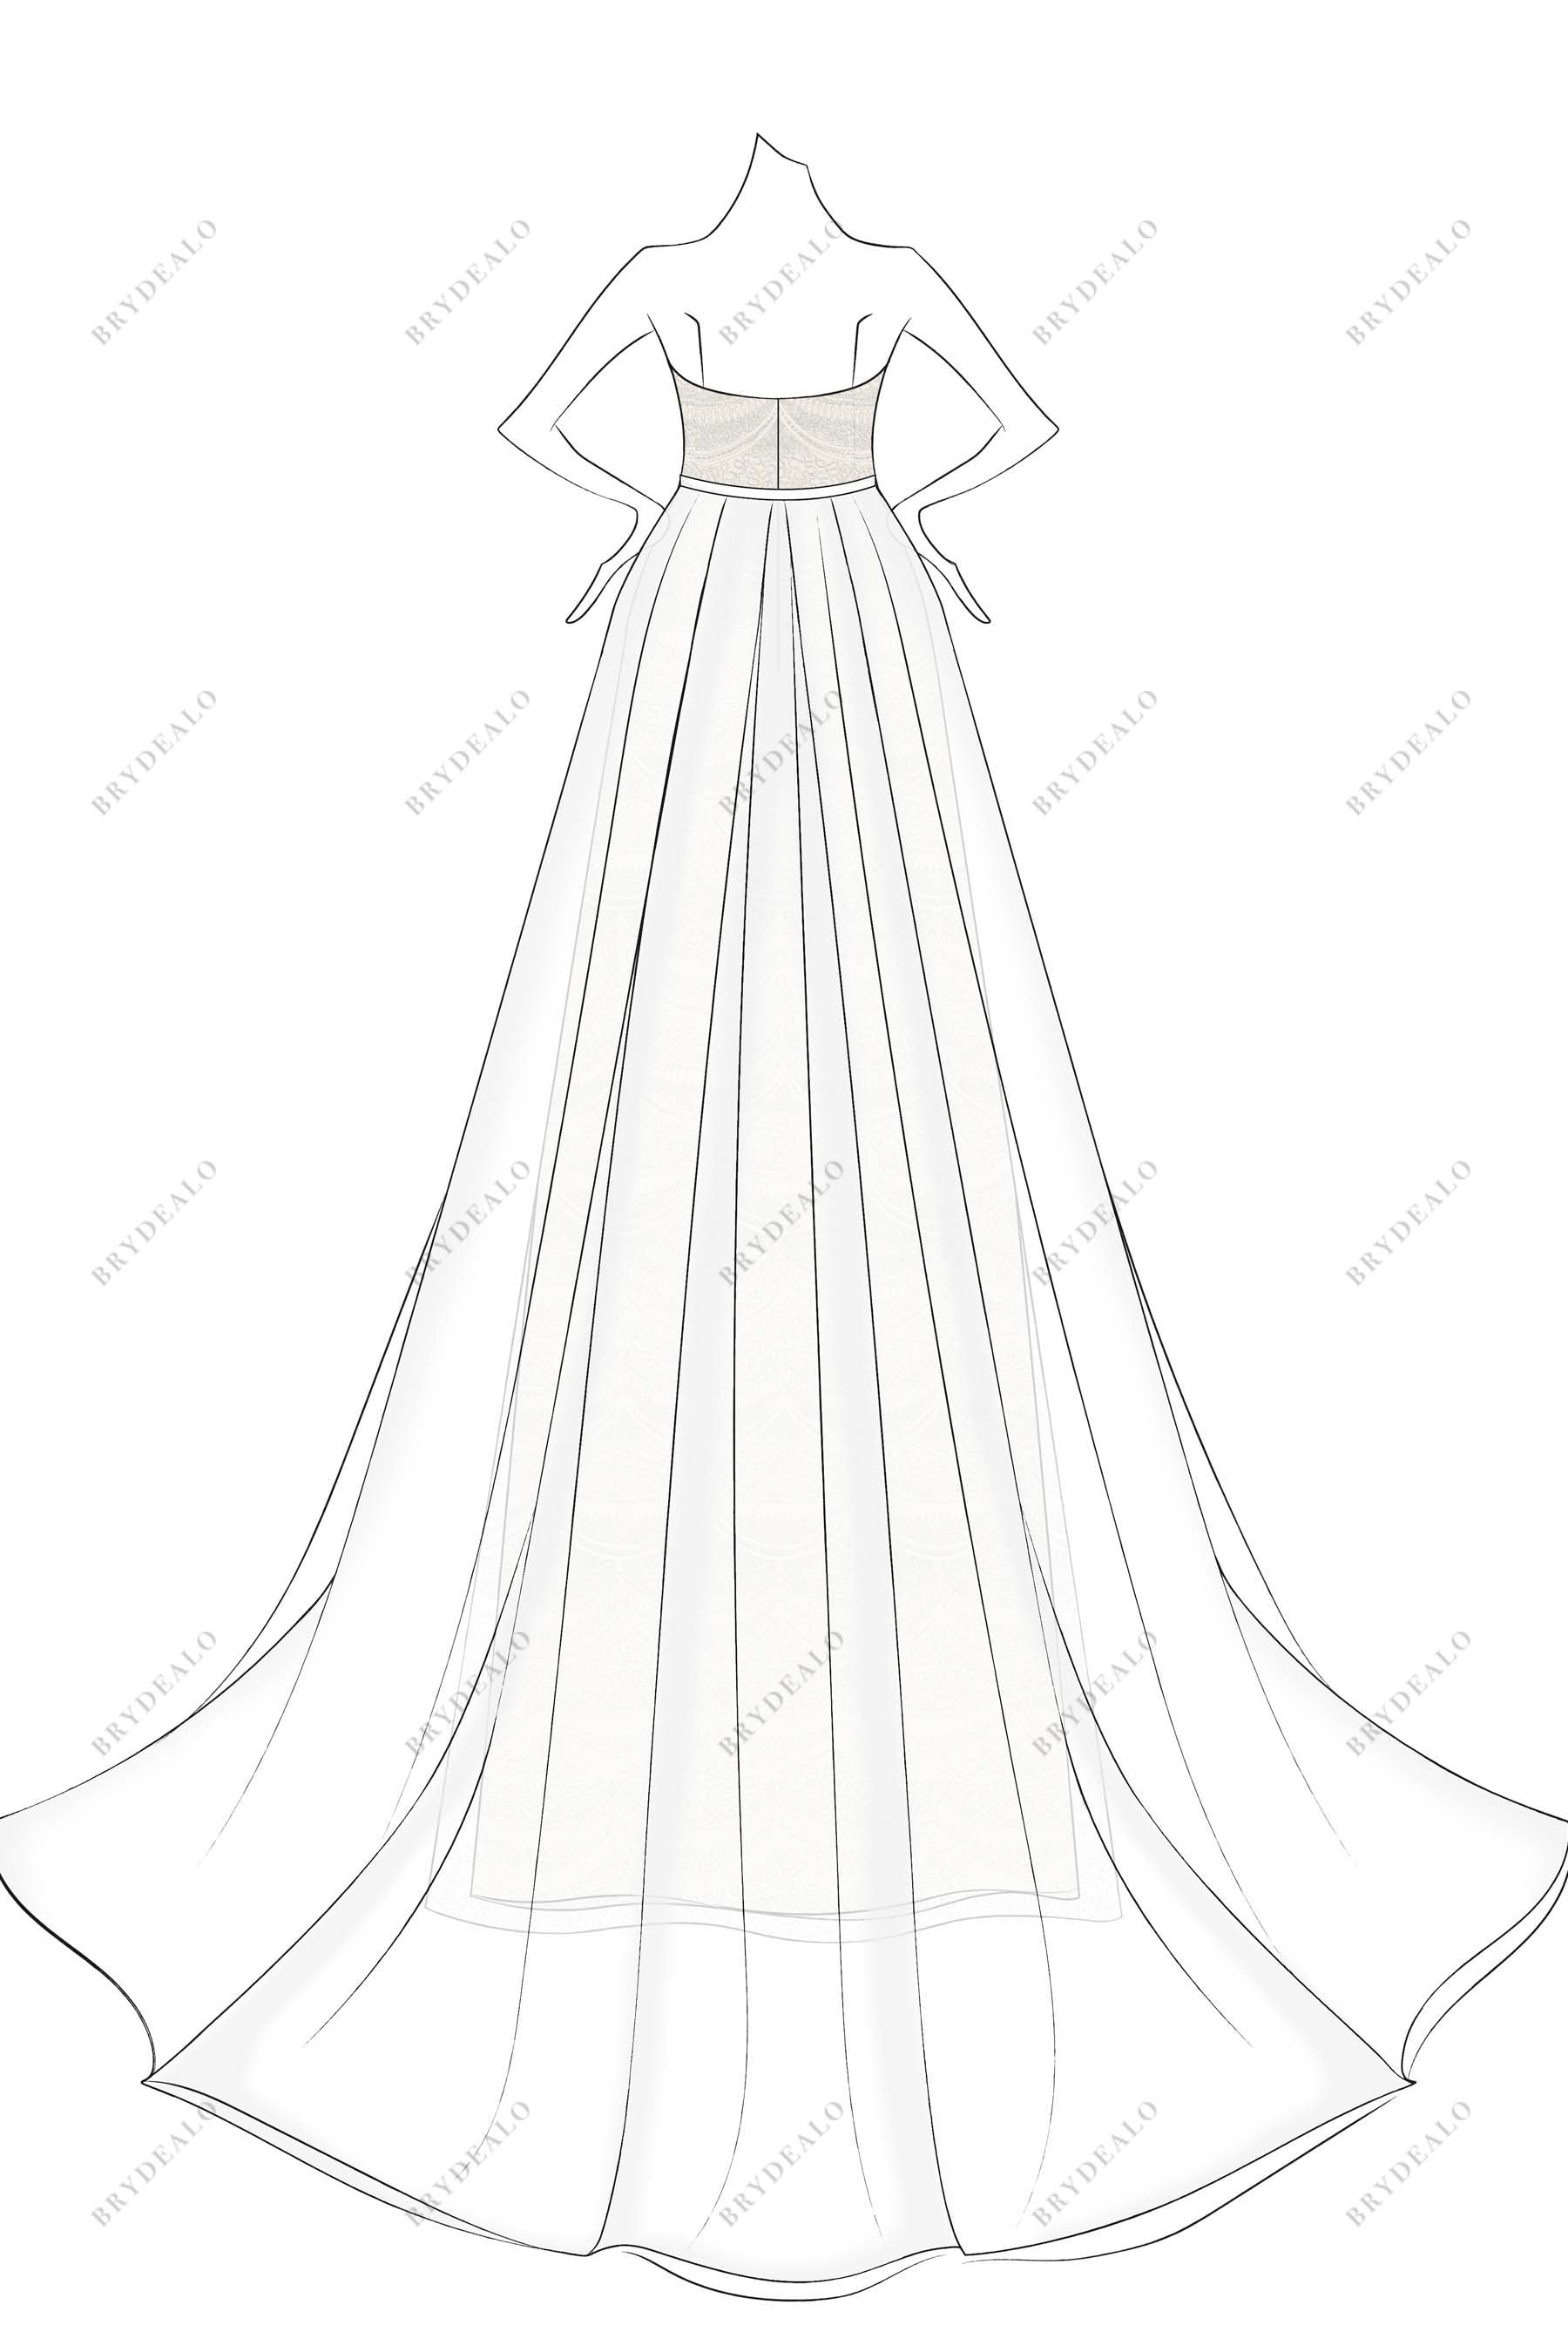 strapless A-line overskirt bridal dress sketch